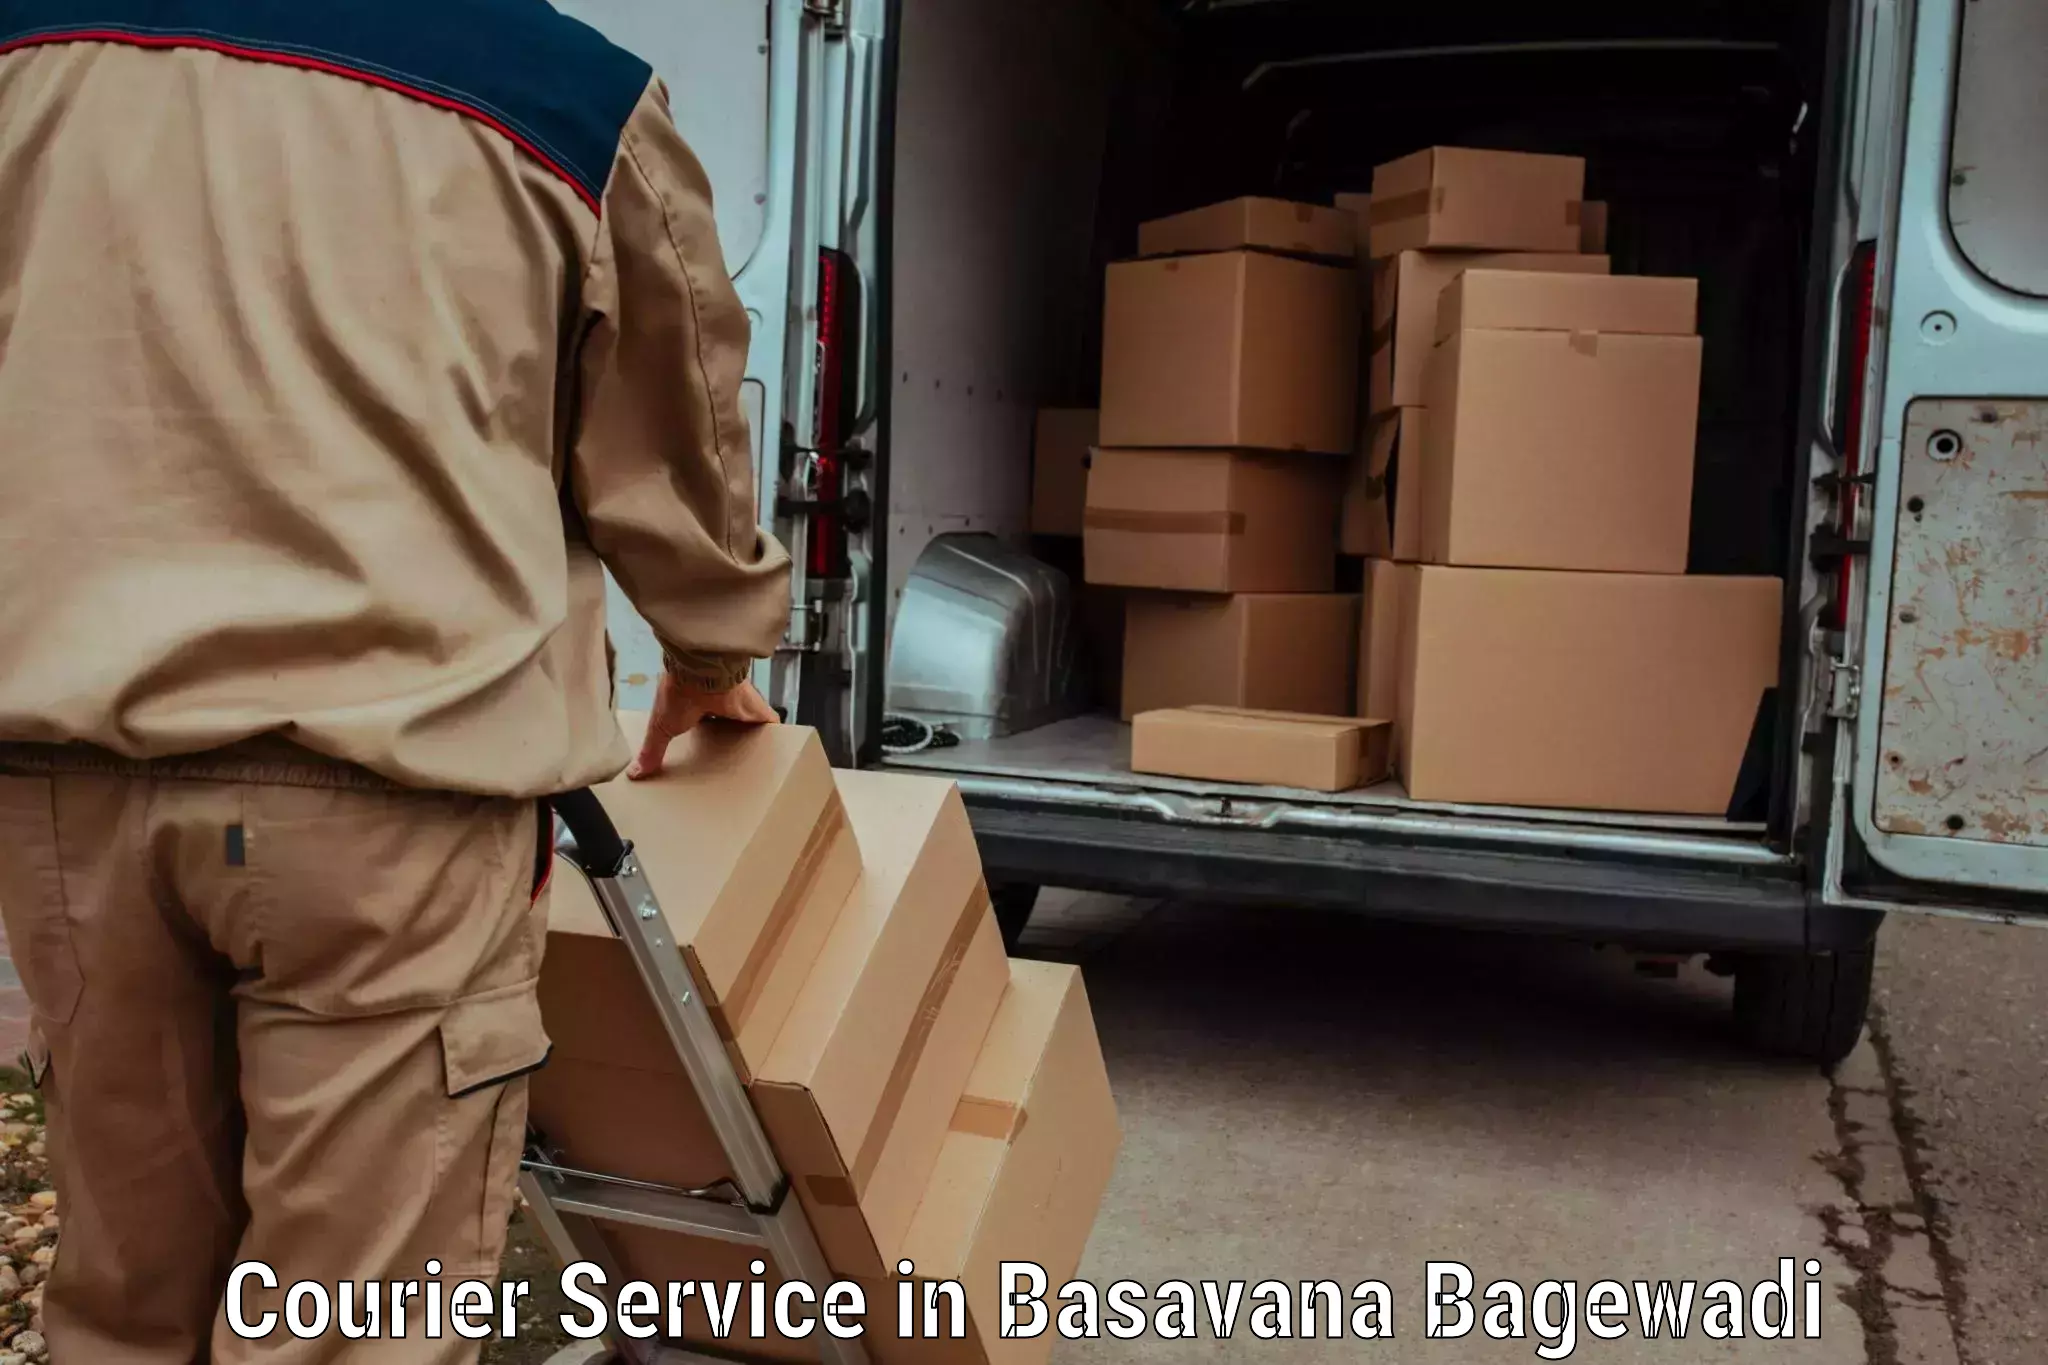 Flexible parcel services in Basavana Bagewadi